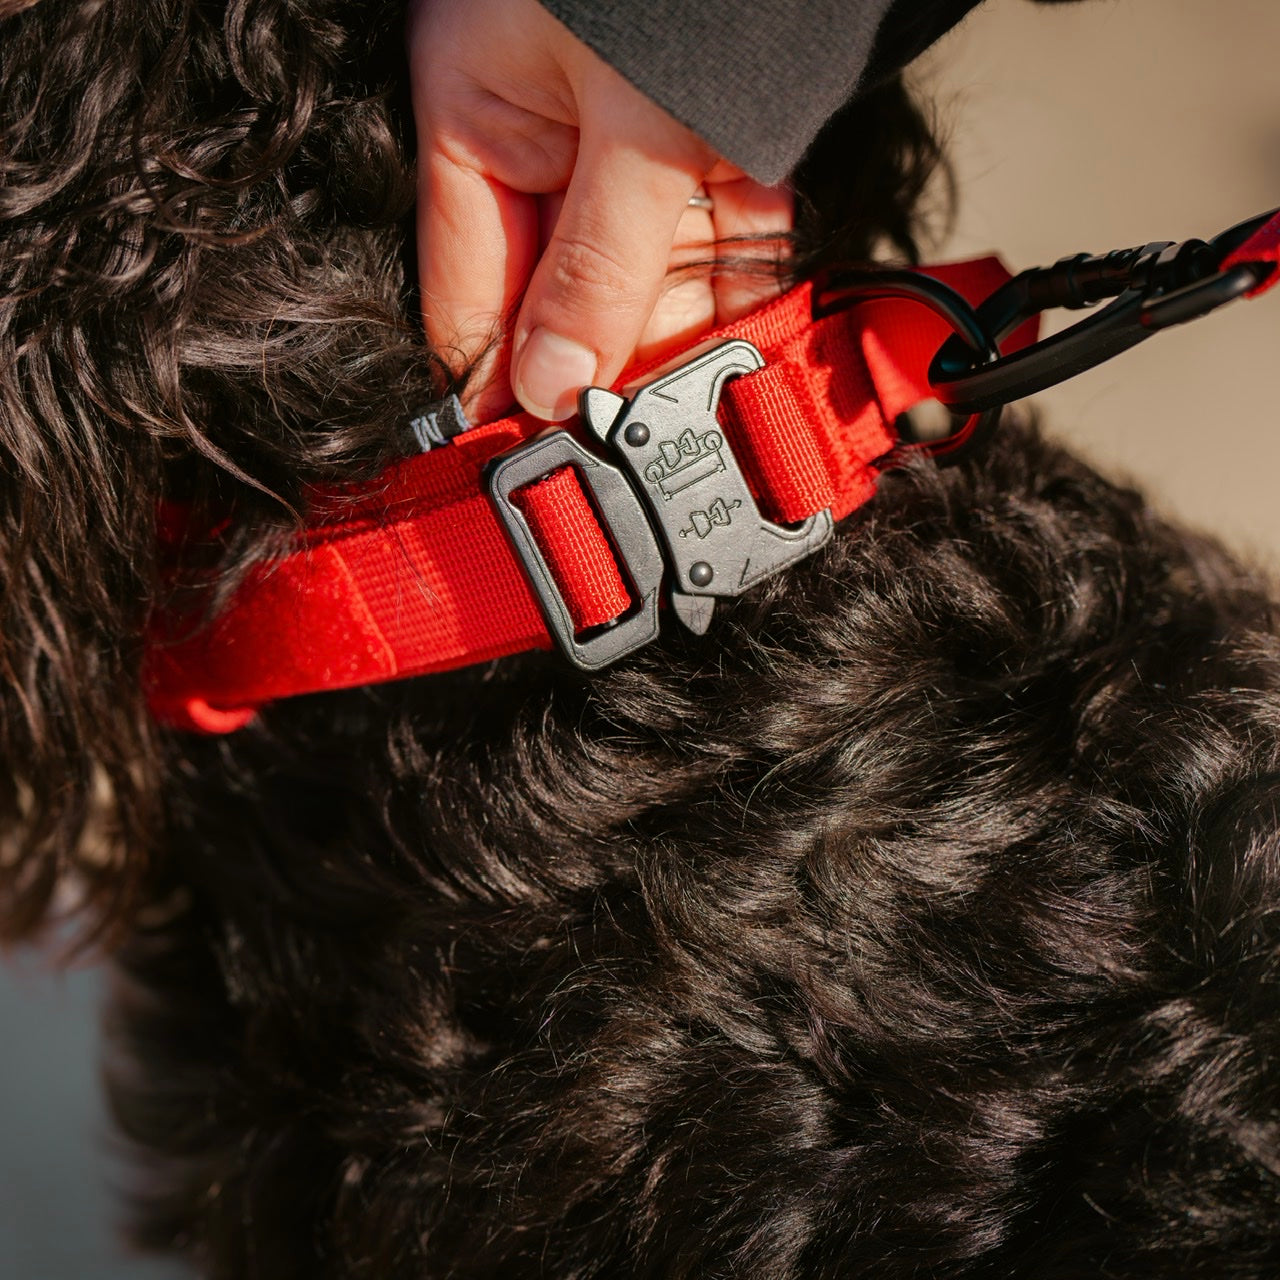 Tactical Nylon Dog Collar Elite Red